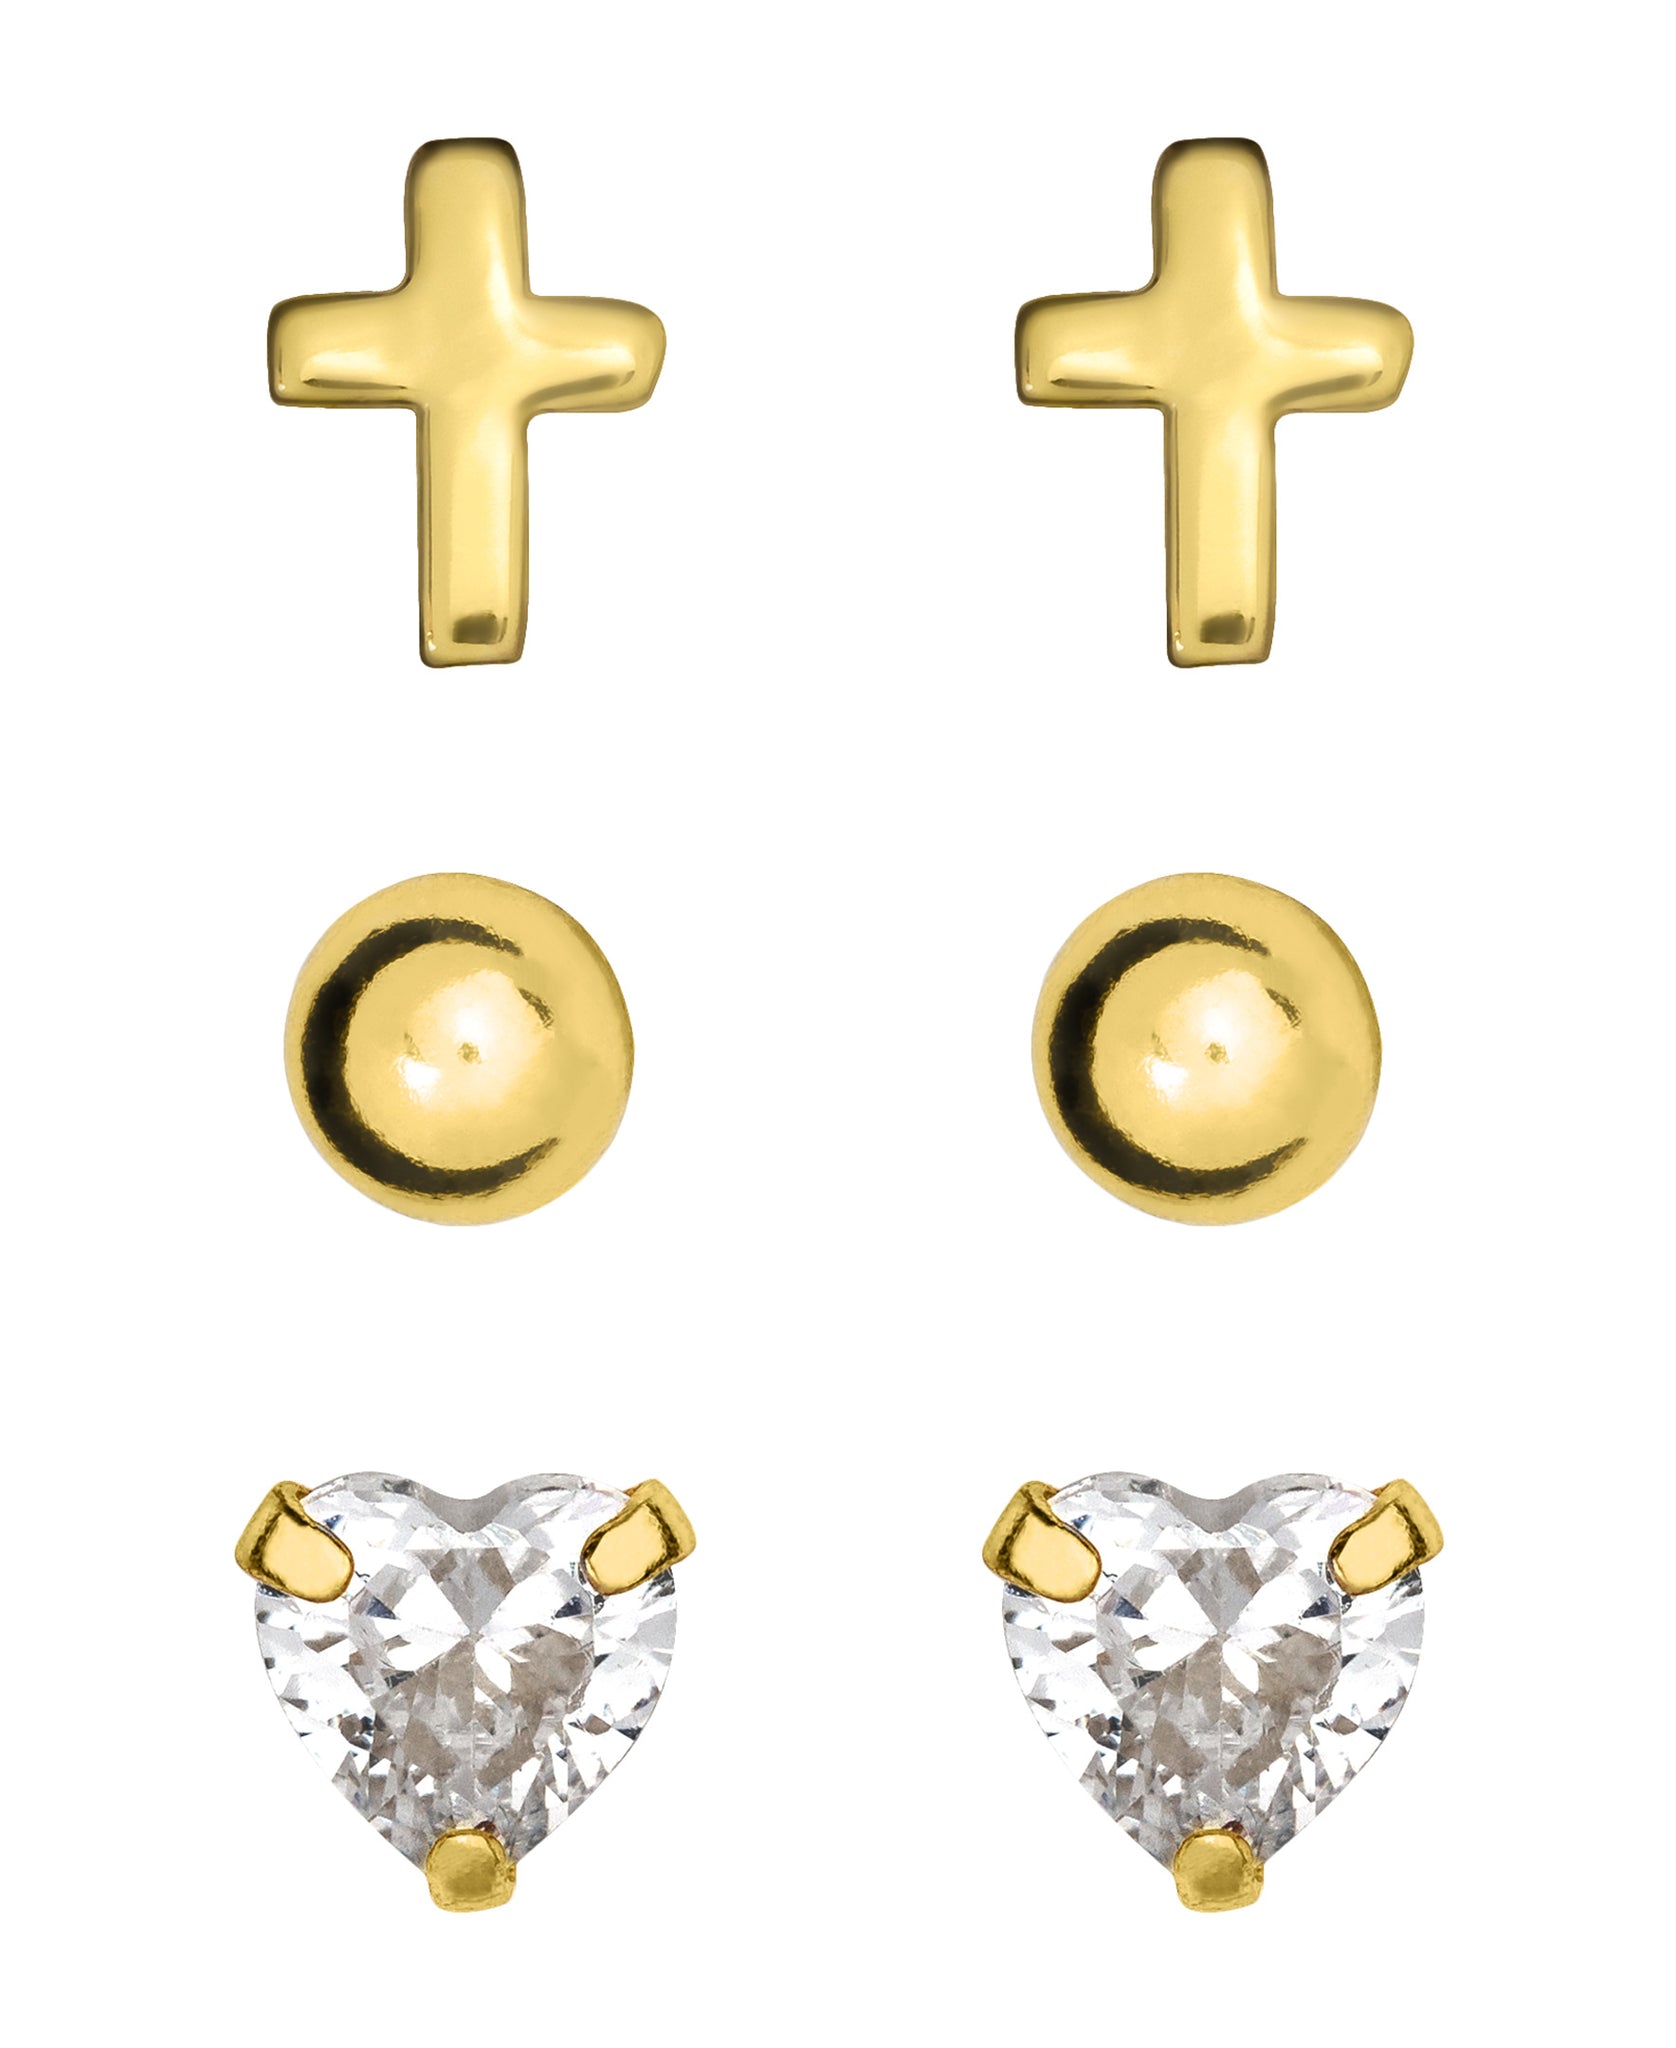 Children's 10K Gold over Sterling Silver Stud Earrings - Set of 3 - Rhona Sutton Jewellery